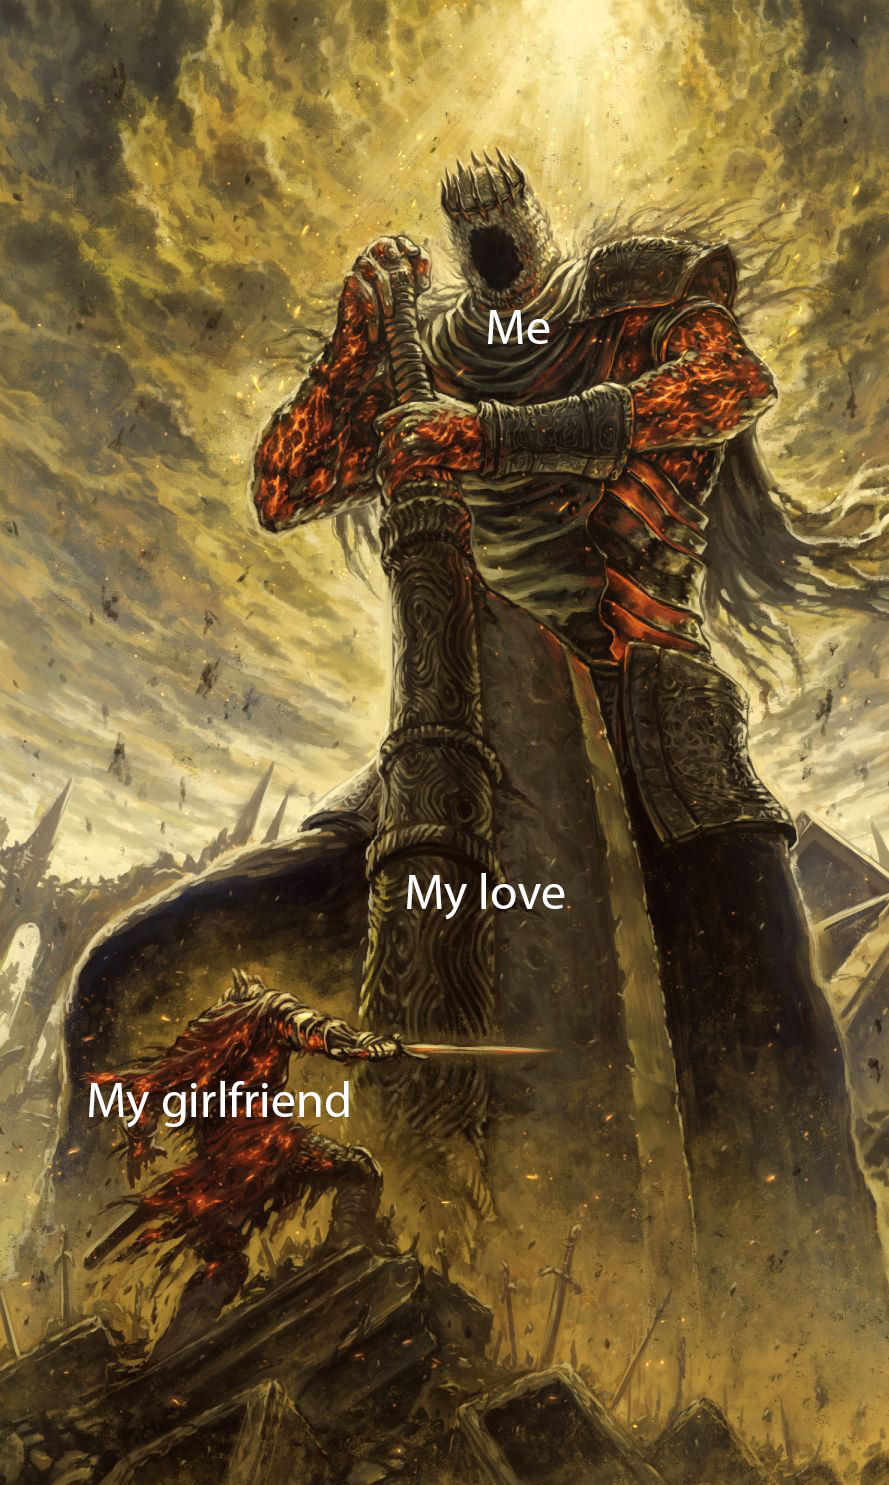 my love meme, my girlfriend versus my love meme